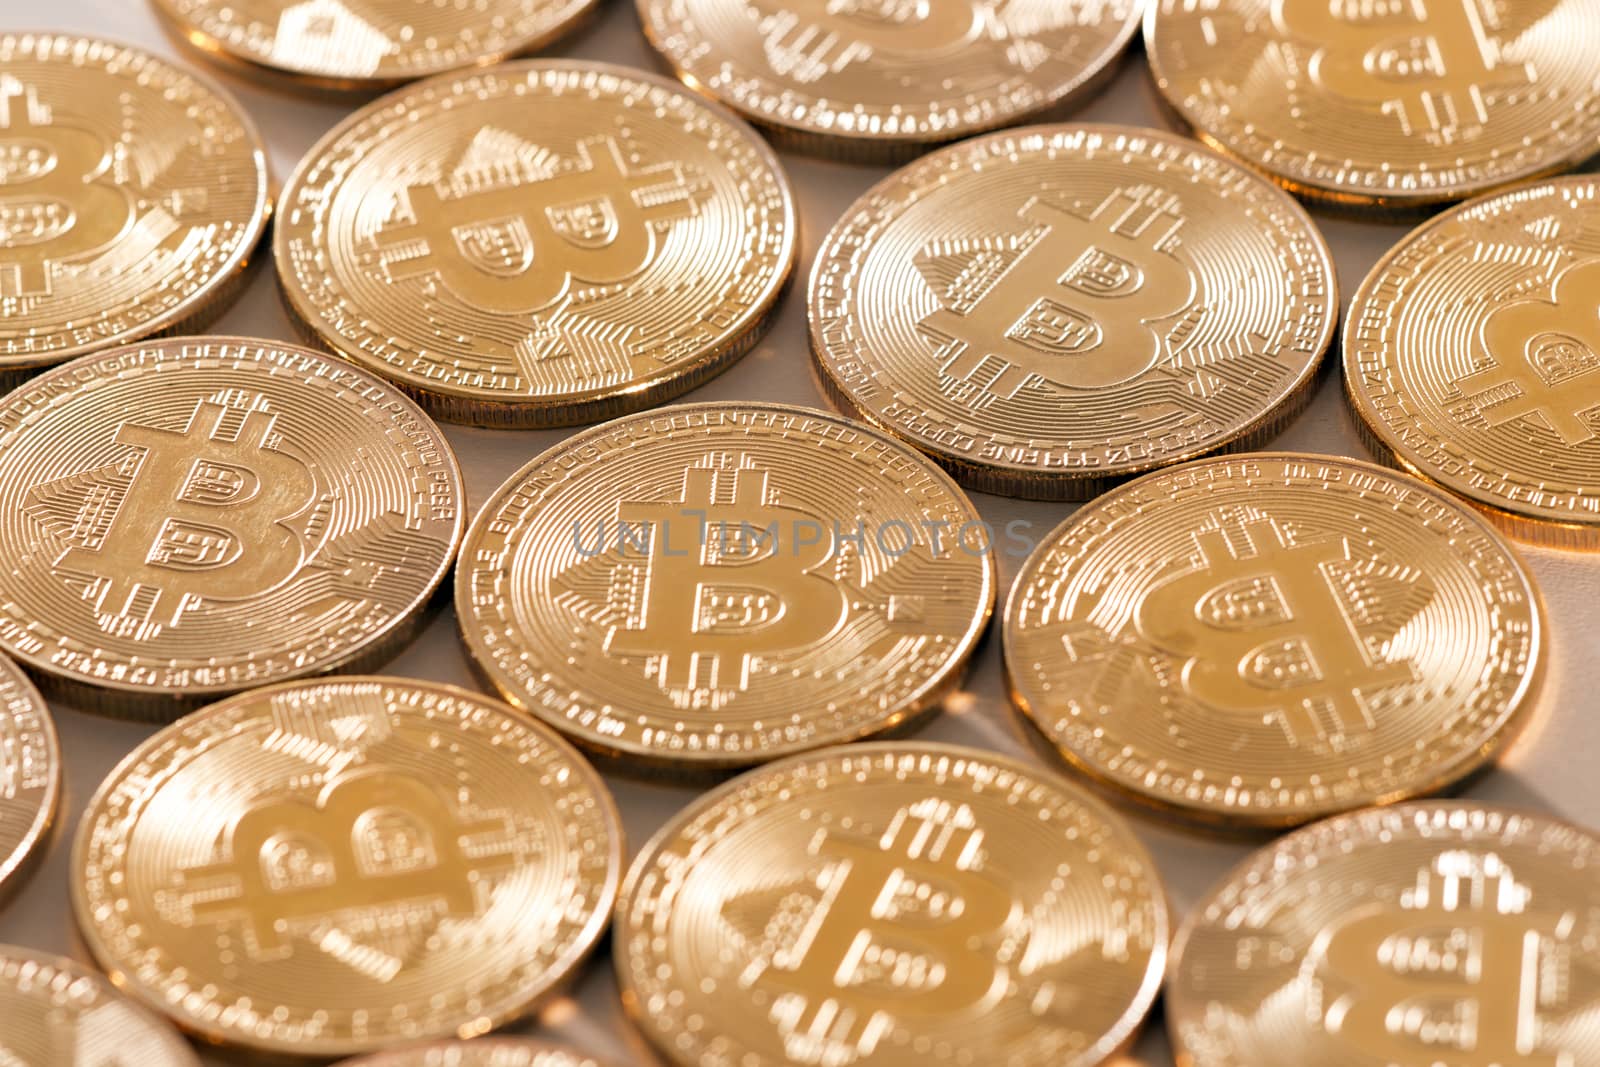 Shiny golden bitcoins on a white background.